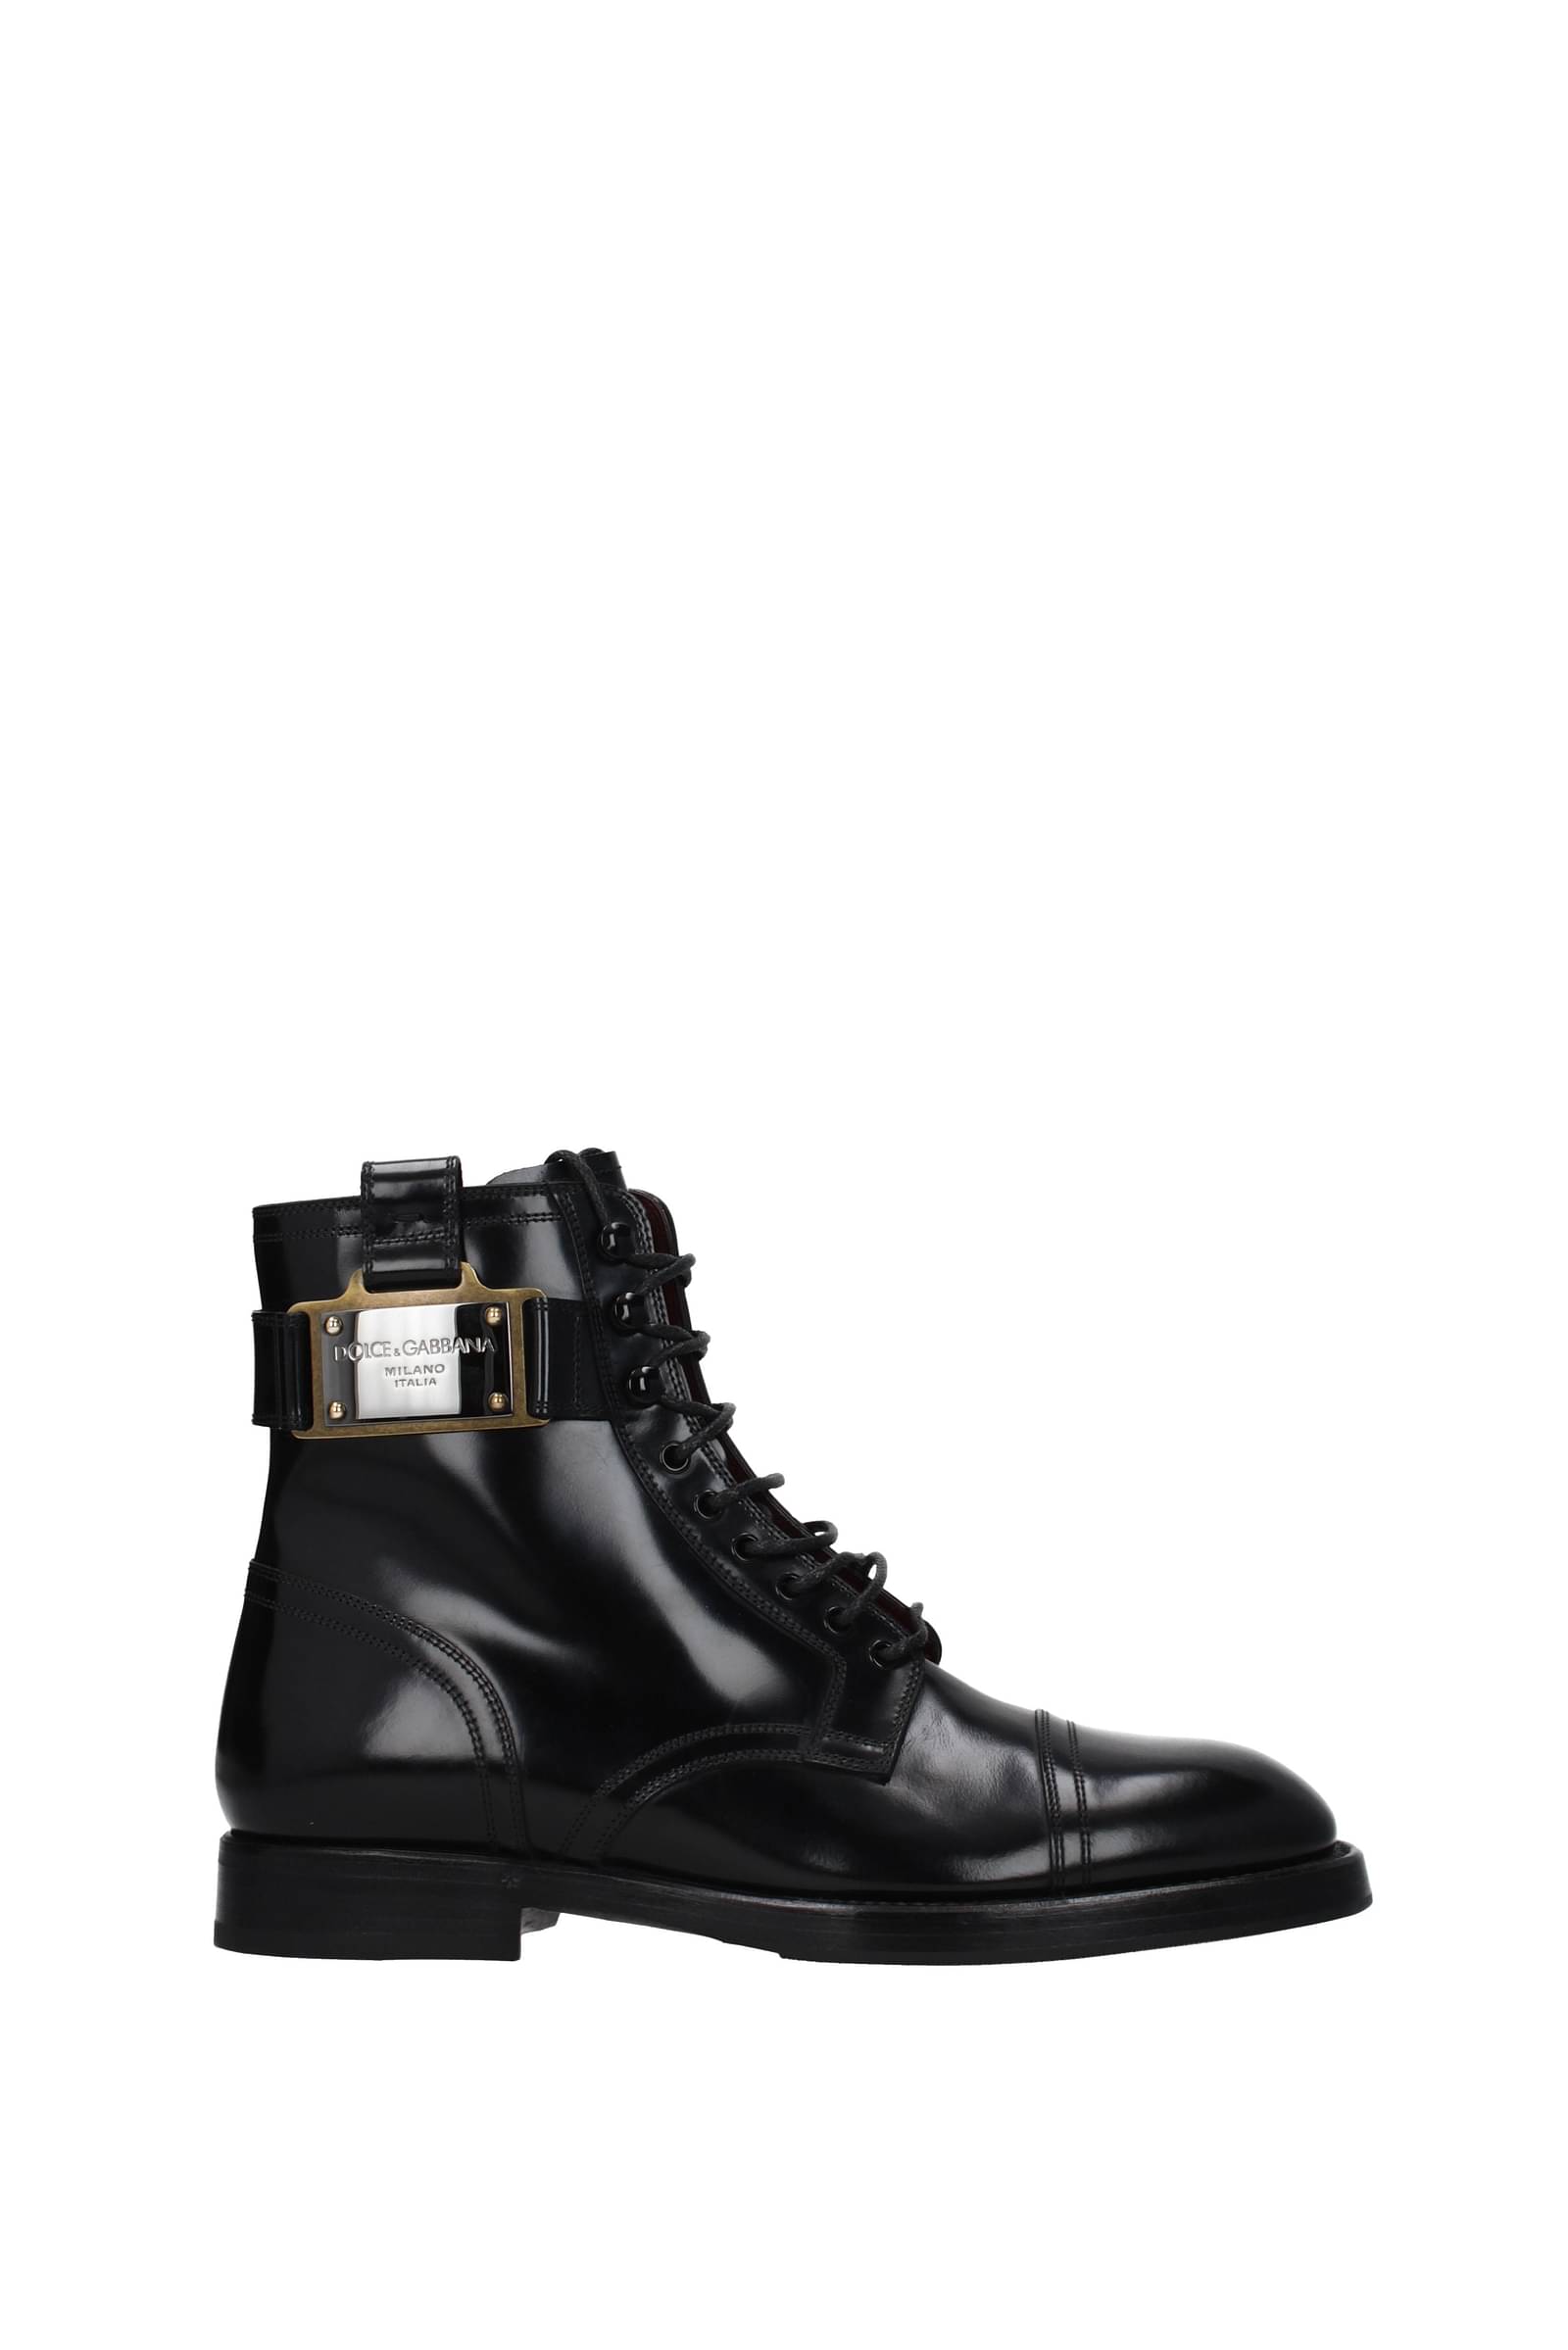 Dolce&Gabbana 踝靴男士A60359A120380999 皮革黑色750€